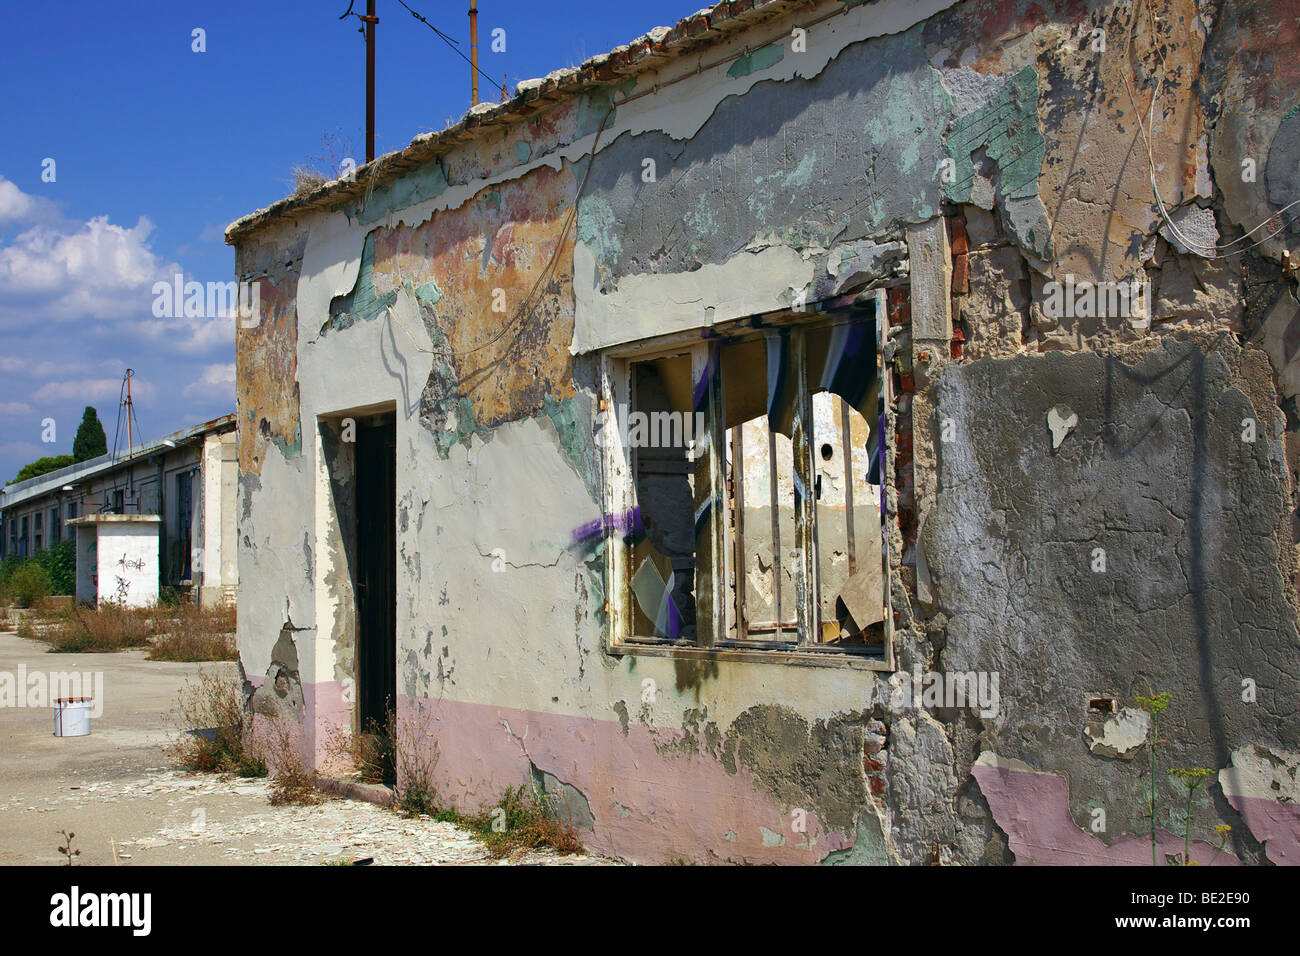 Colorful ruin in Croatian suburb Stock Photo